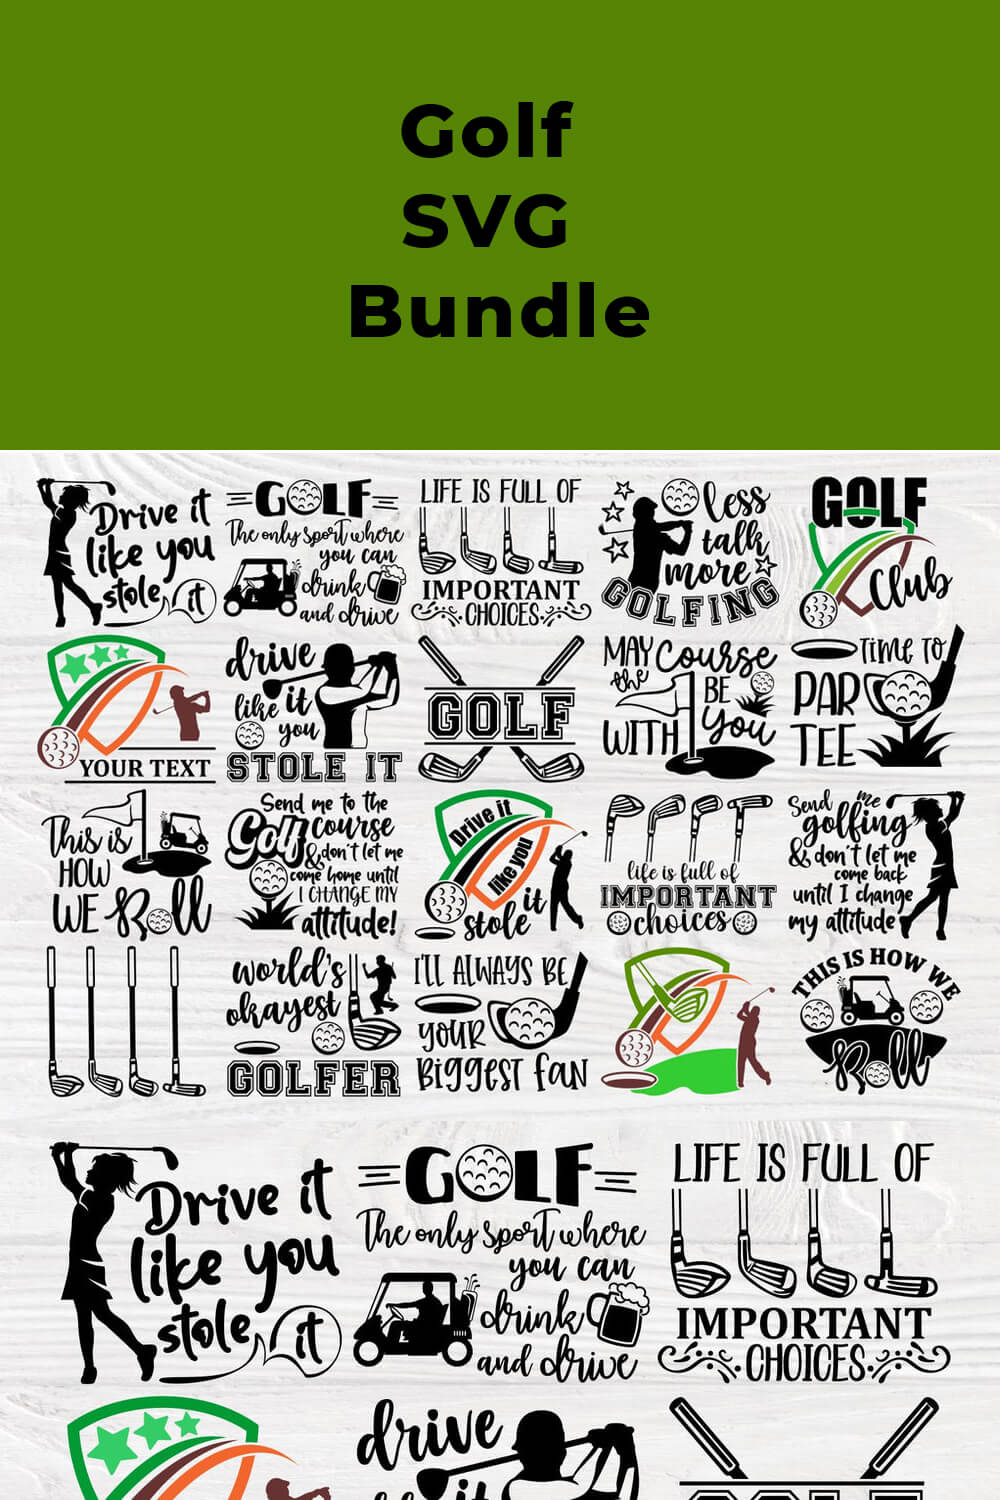 Golf SVG Bundle on the green background.